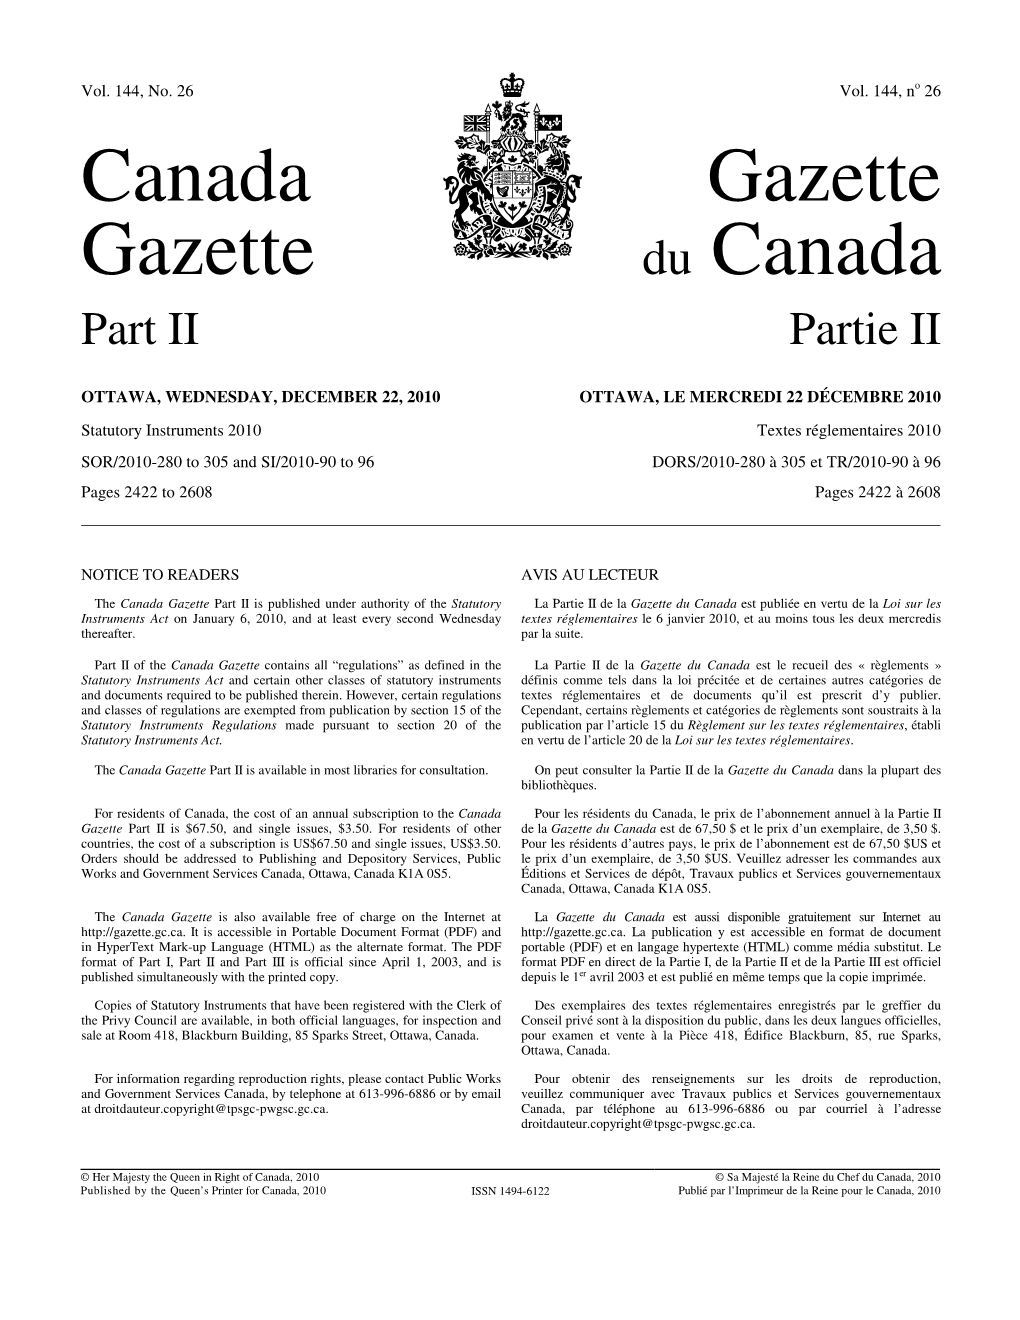 Canada Gazette, Part II Publication, As a Result of the Discussions Au Cours Du Processus De Consultation, De Multiples Modifications and Feedback During Consultation